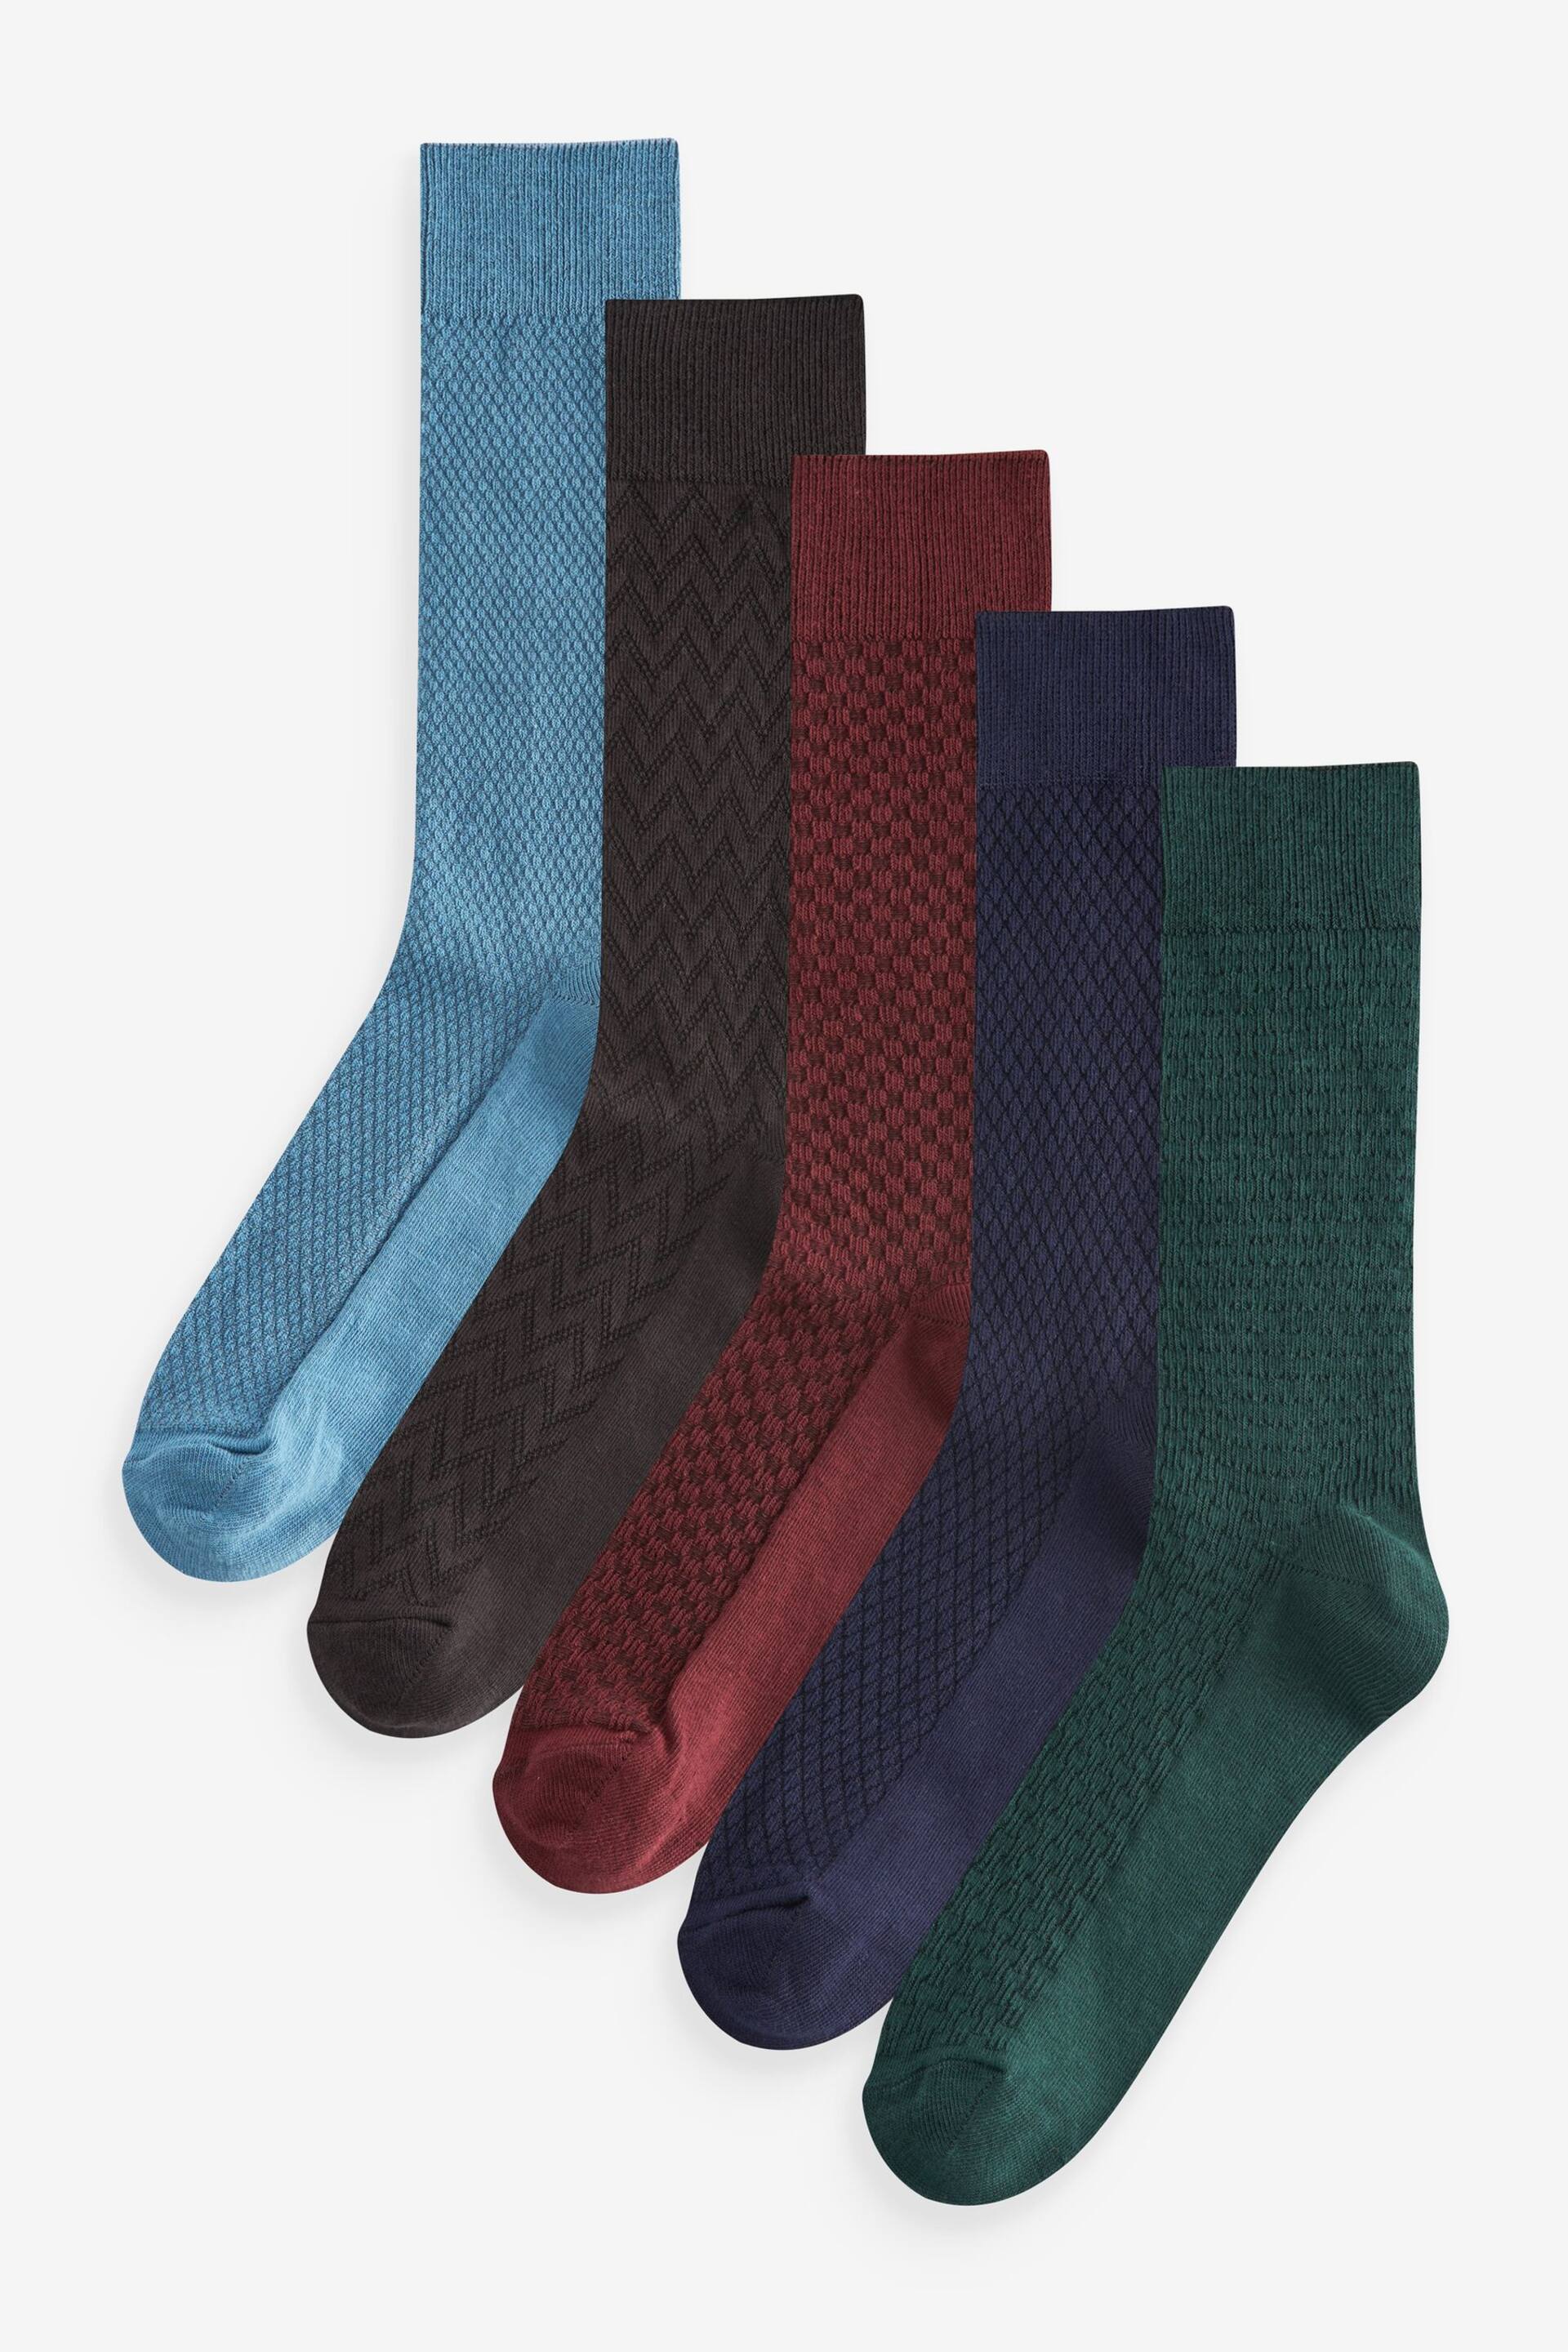 Blue/Green 5 Pack Lightweight Texture Socks - Image 1 of 6